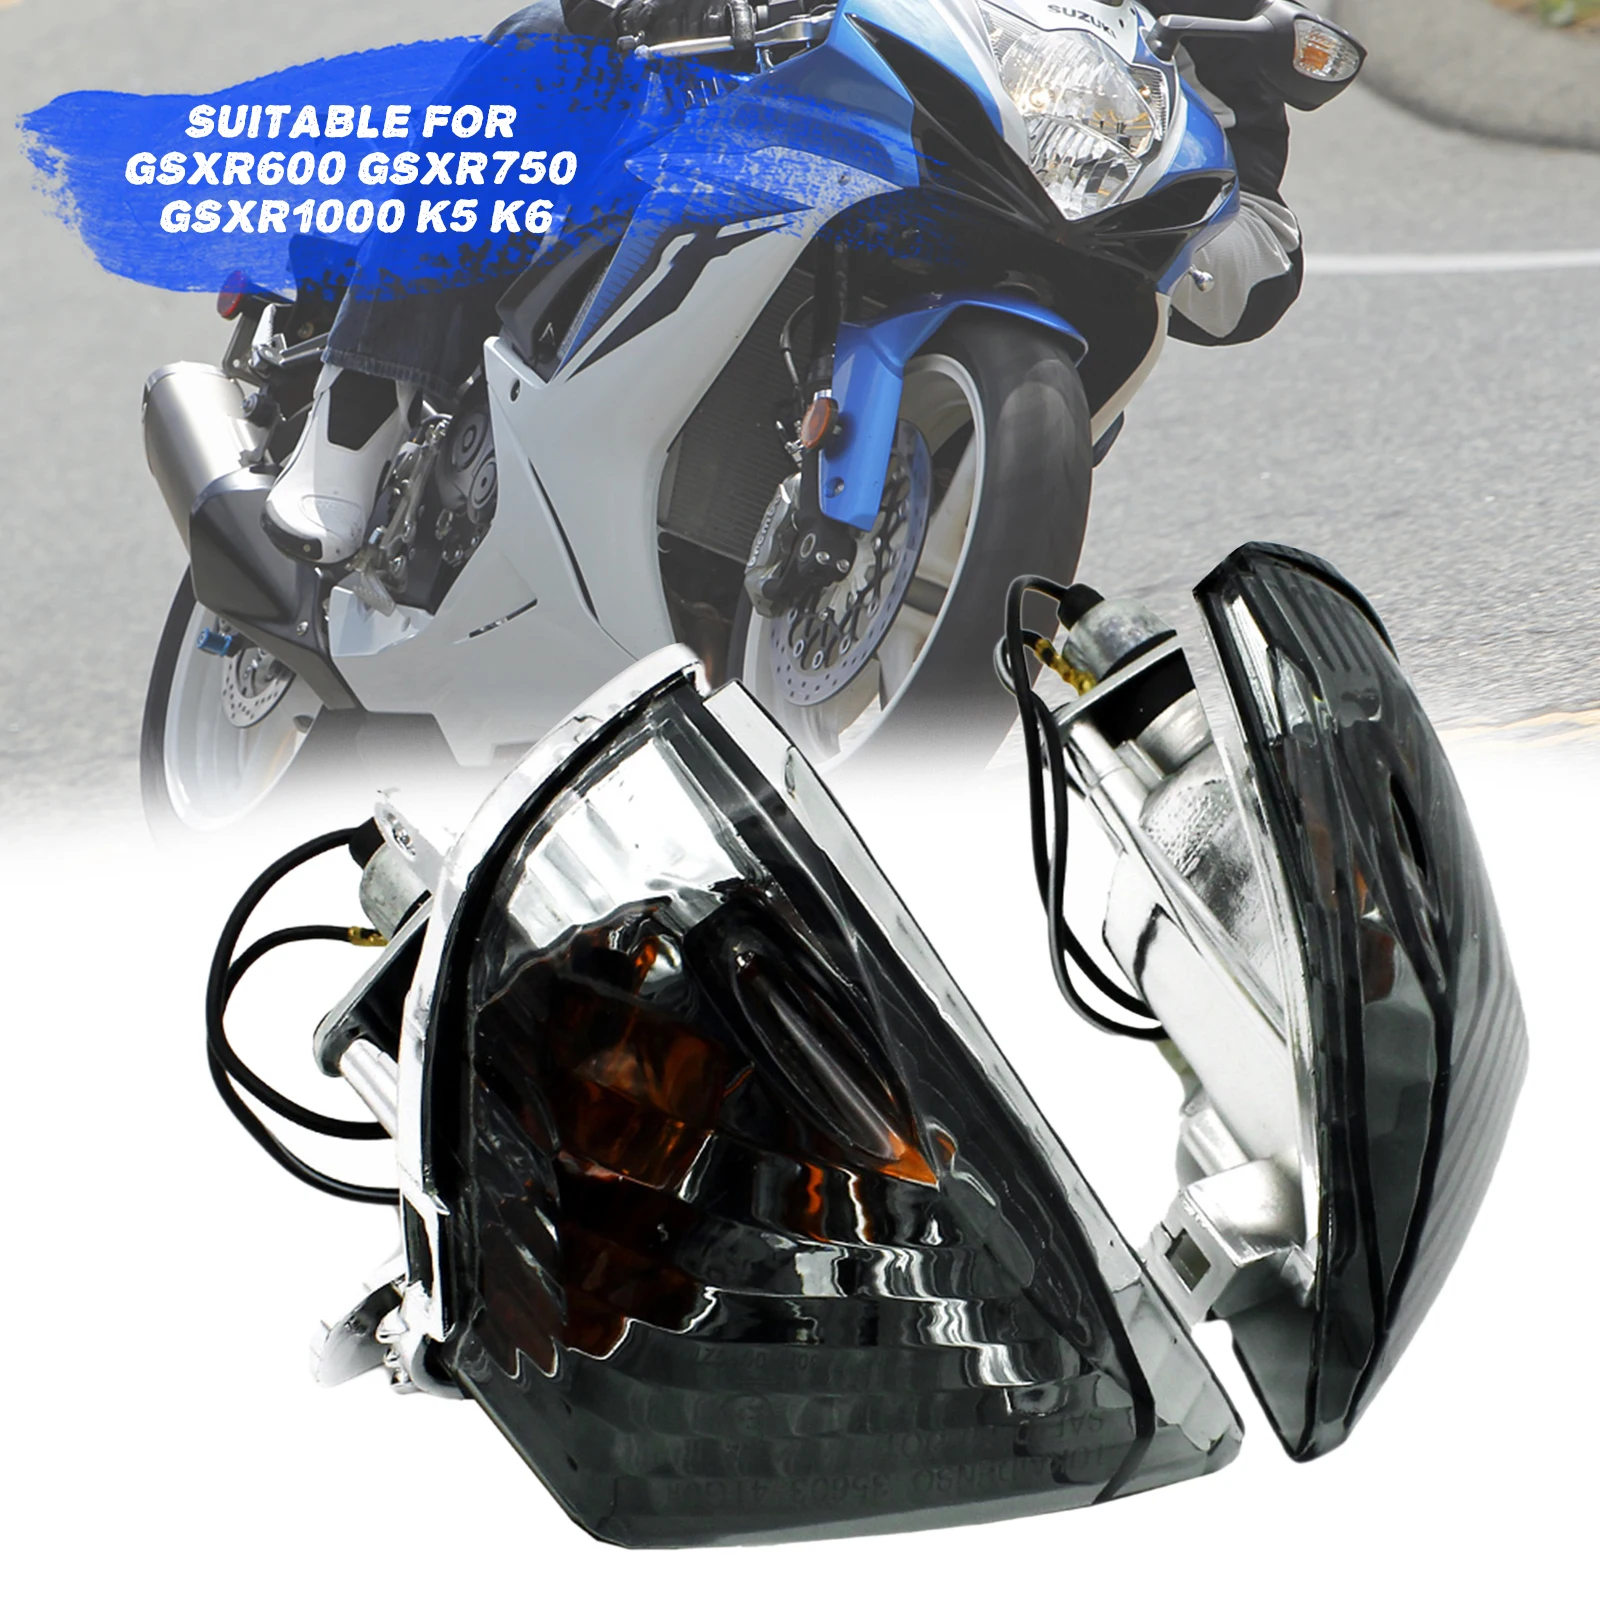 

Smoked Lens Rear Turn Signal Light LED Light Indicator Compatible with Suzuki GSXR600 GSXR750 K6 2006-2007 GSXR1000 K5 2005-2006